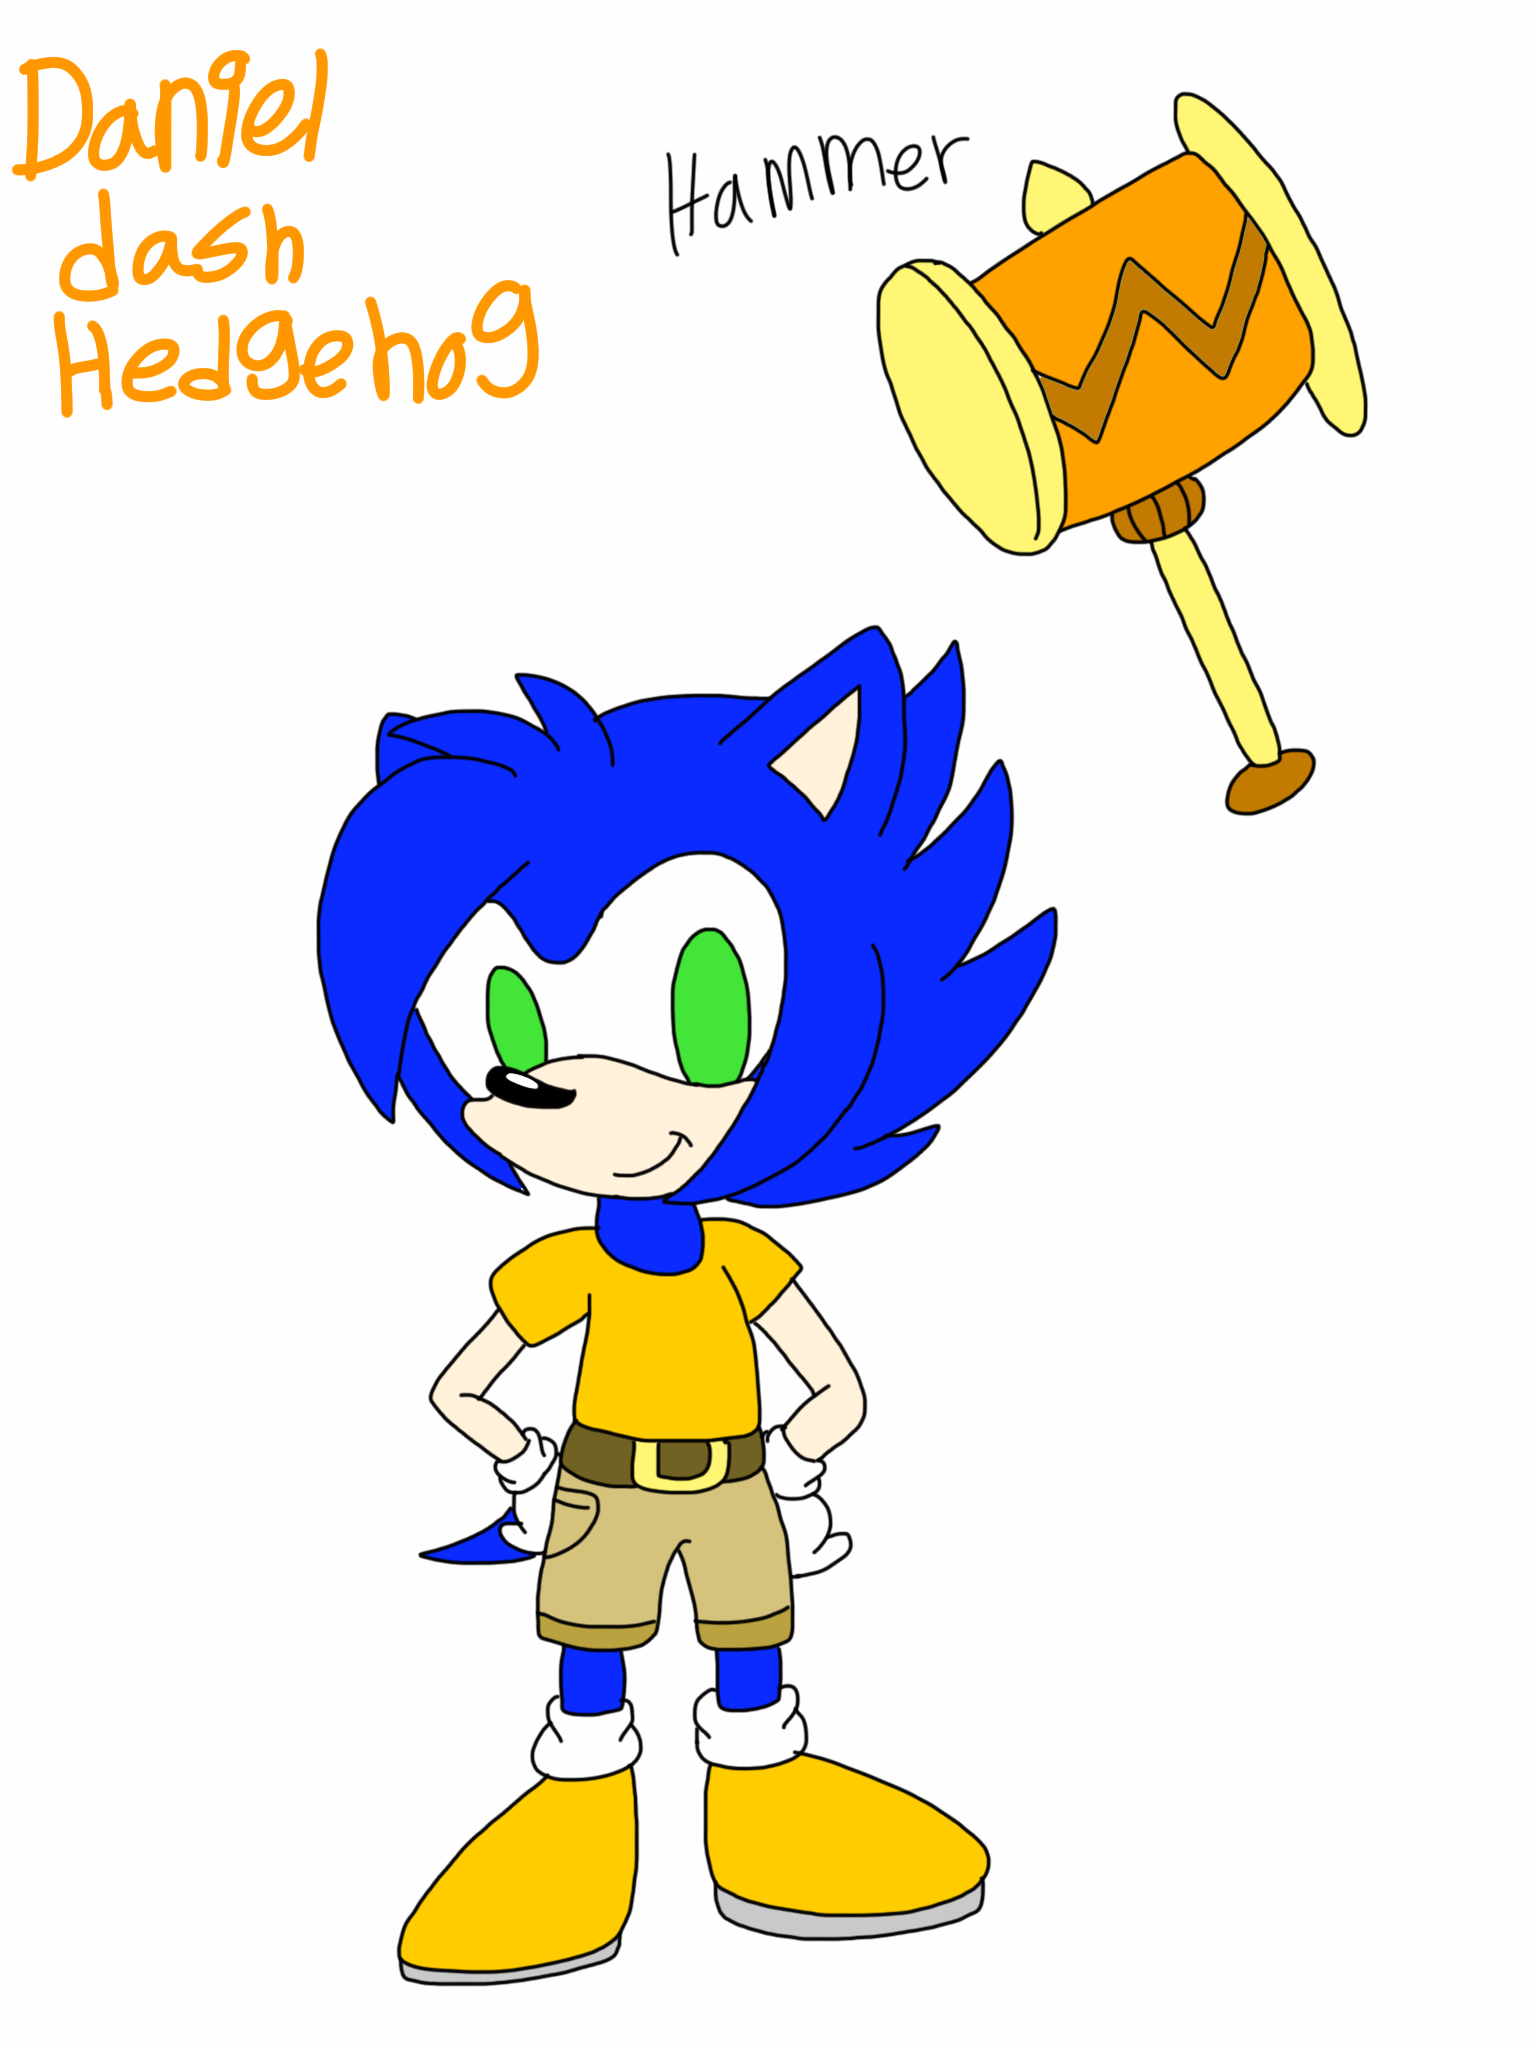 Sonic next gen 1 oc: Daniel dash hedgehog 